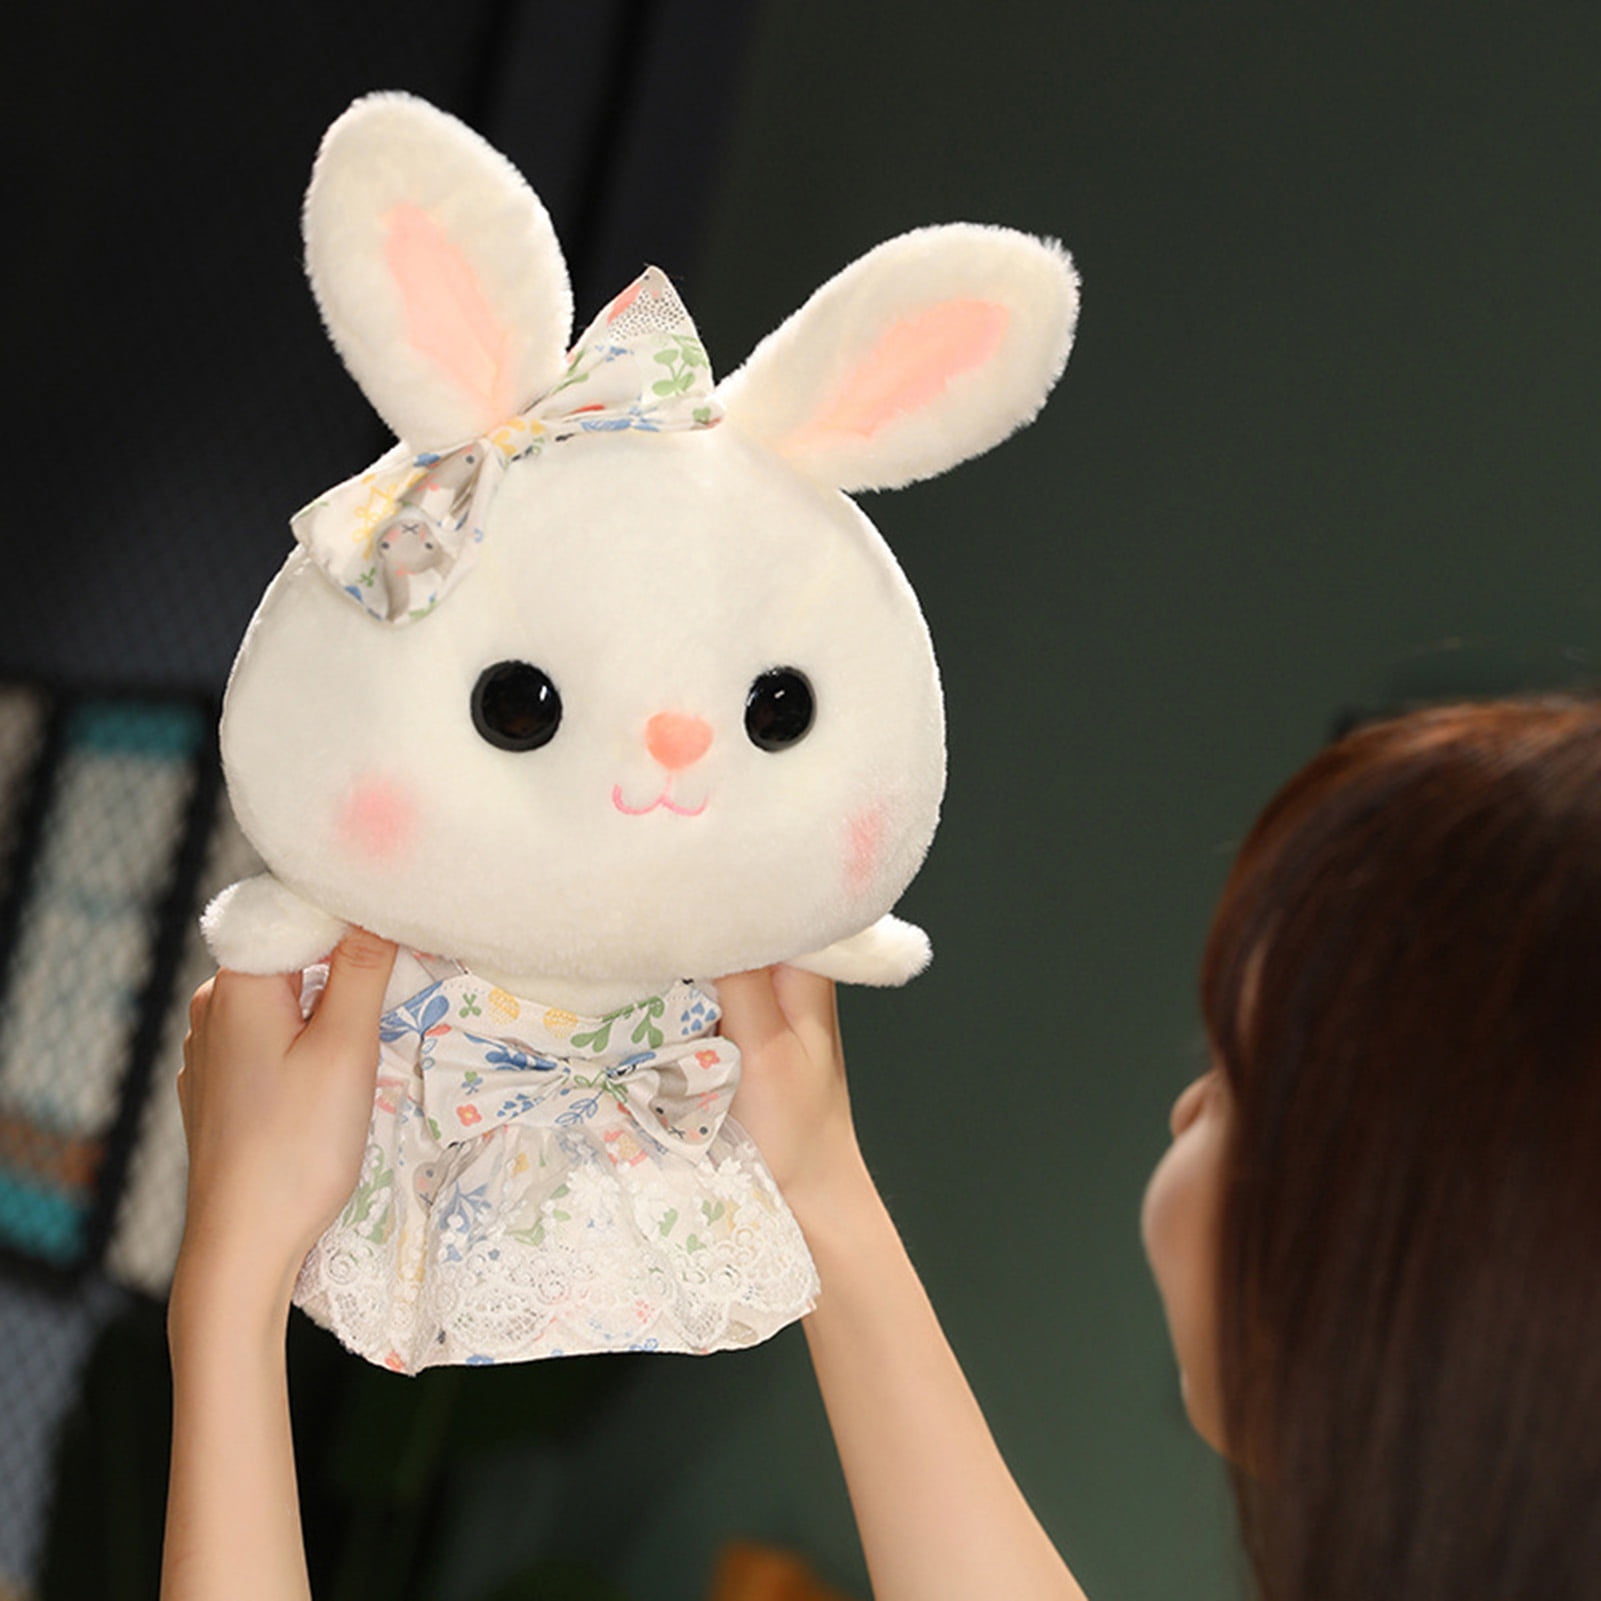 2022 Bunzo Bunny Plush Toy Rabbit Stuffed Dolls 30cm Soft Cartoon